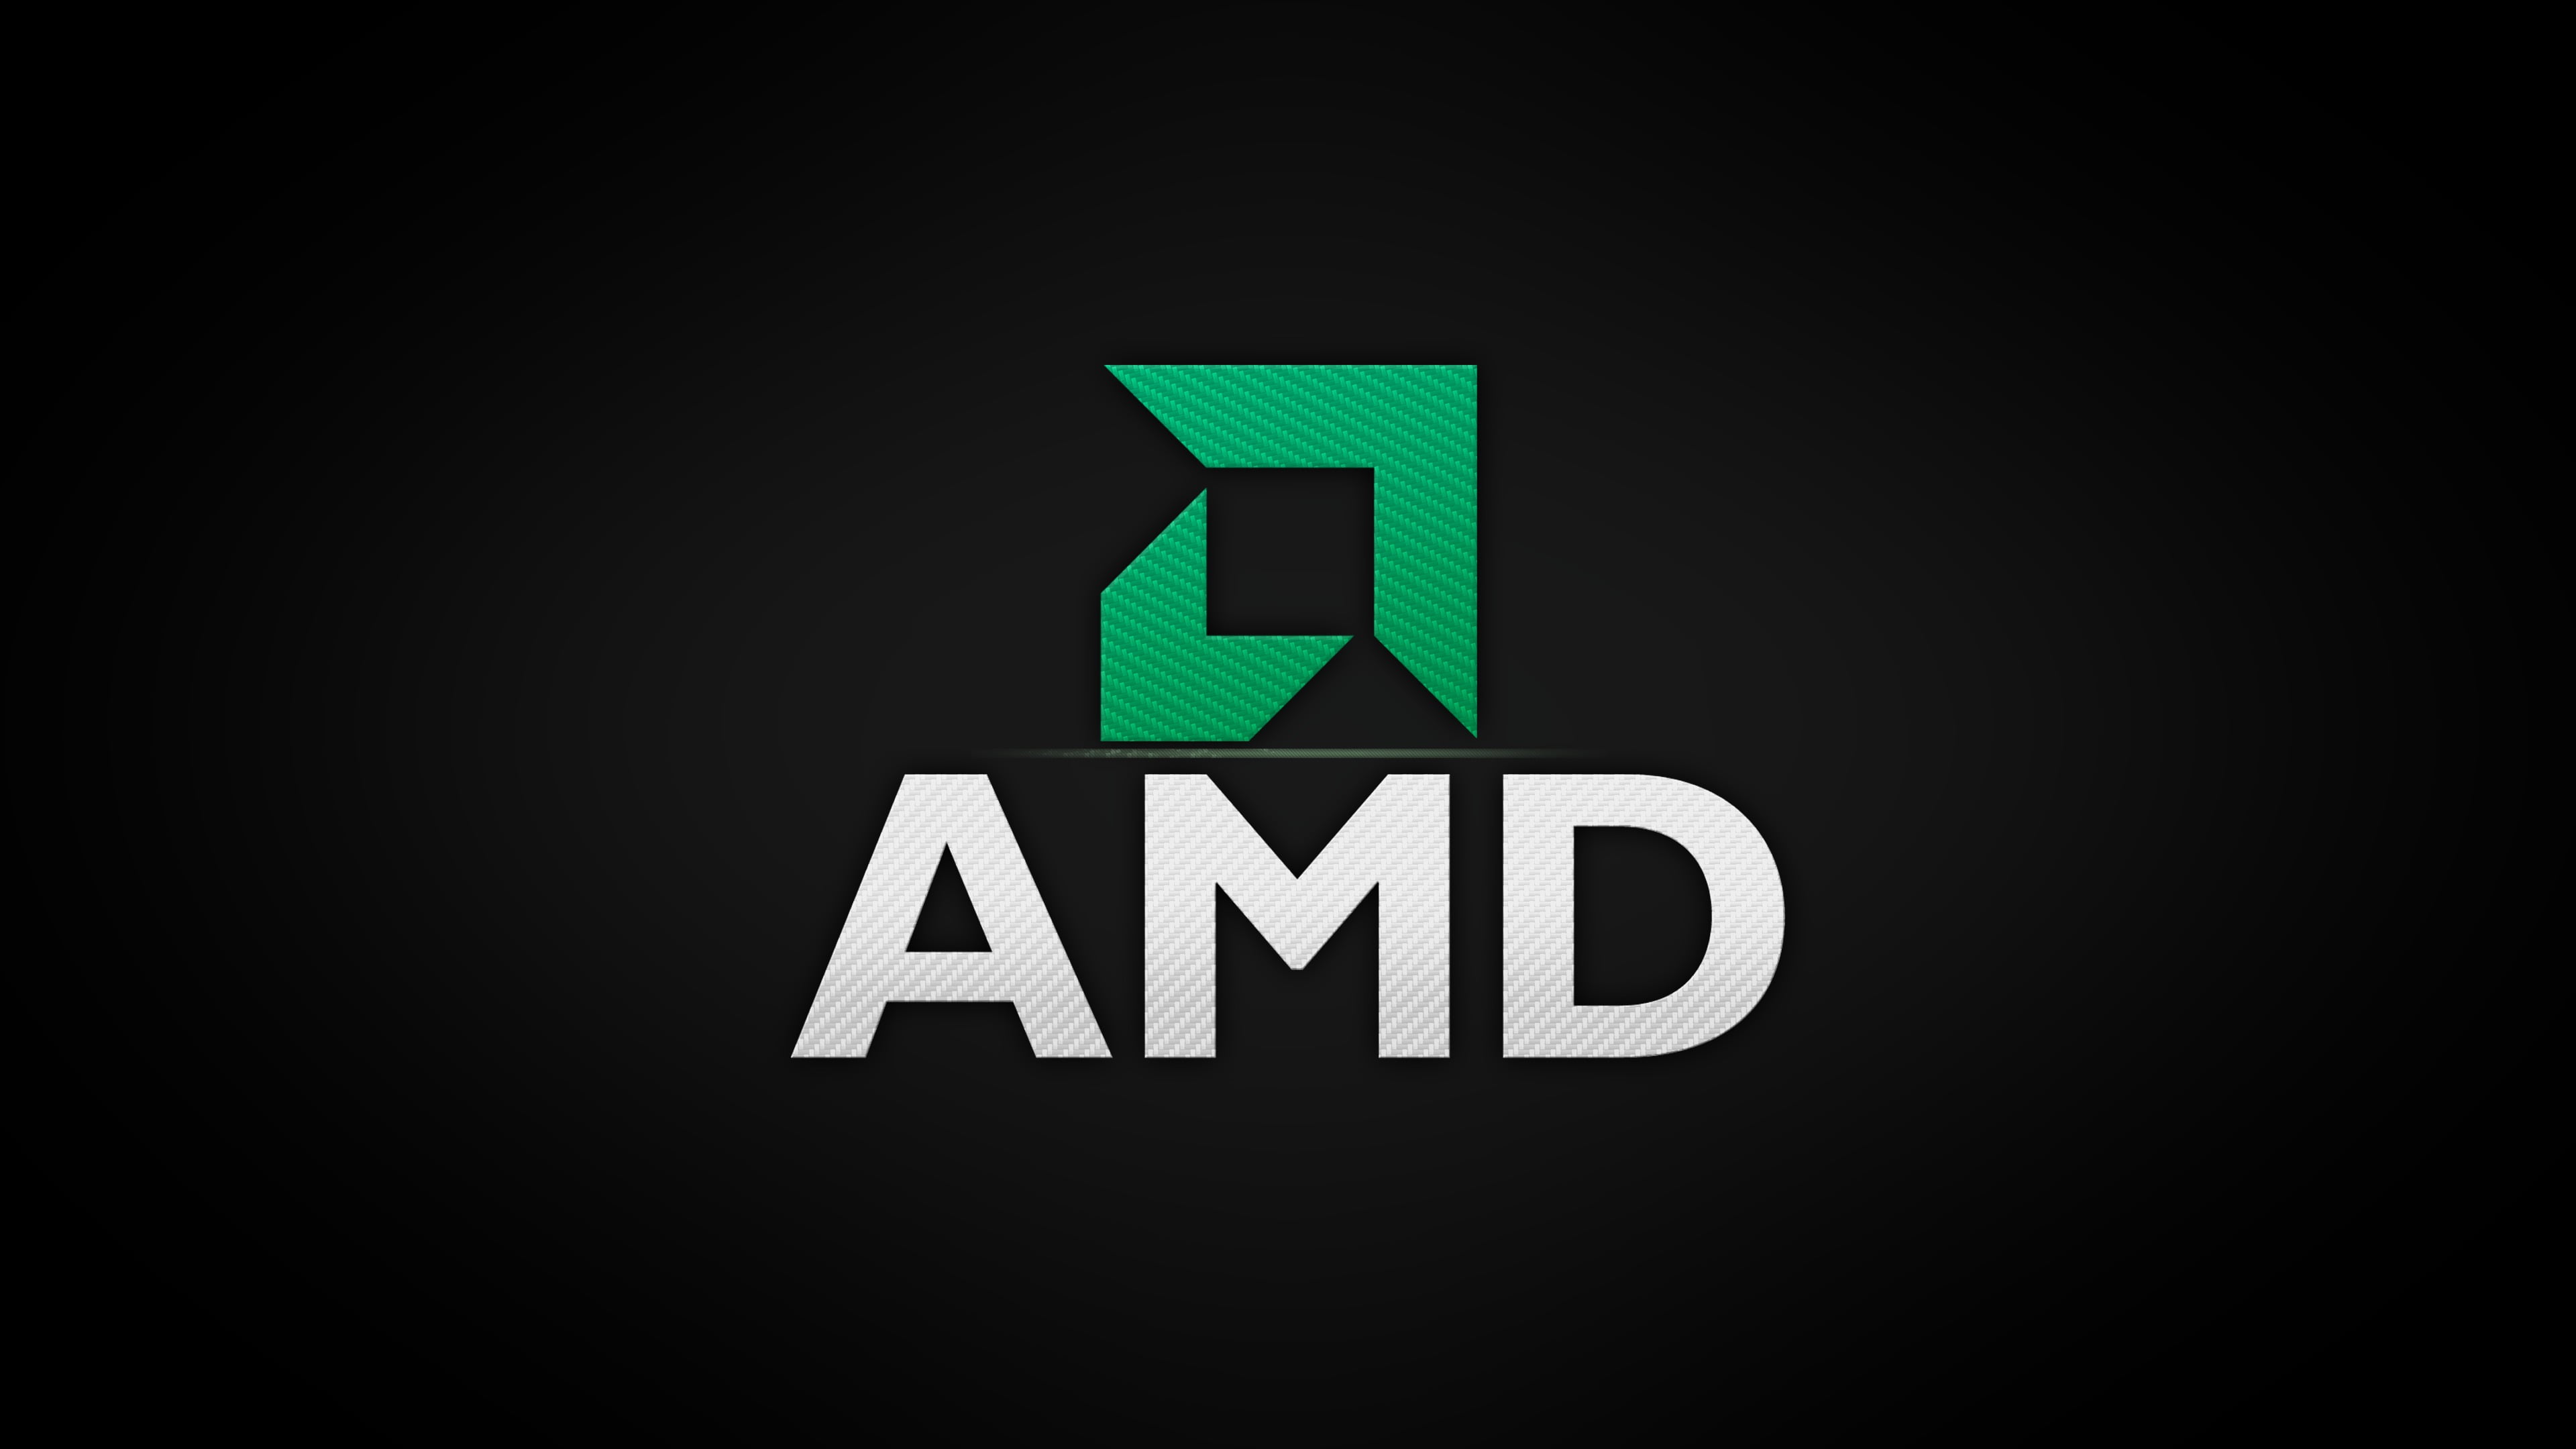 AMD, communication, sign, western script, text, arrow symbol